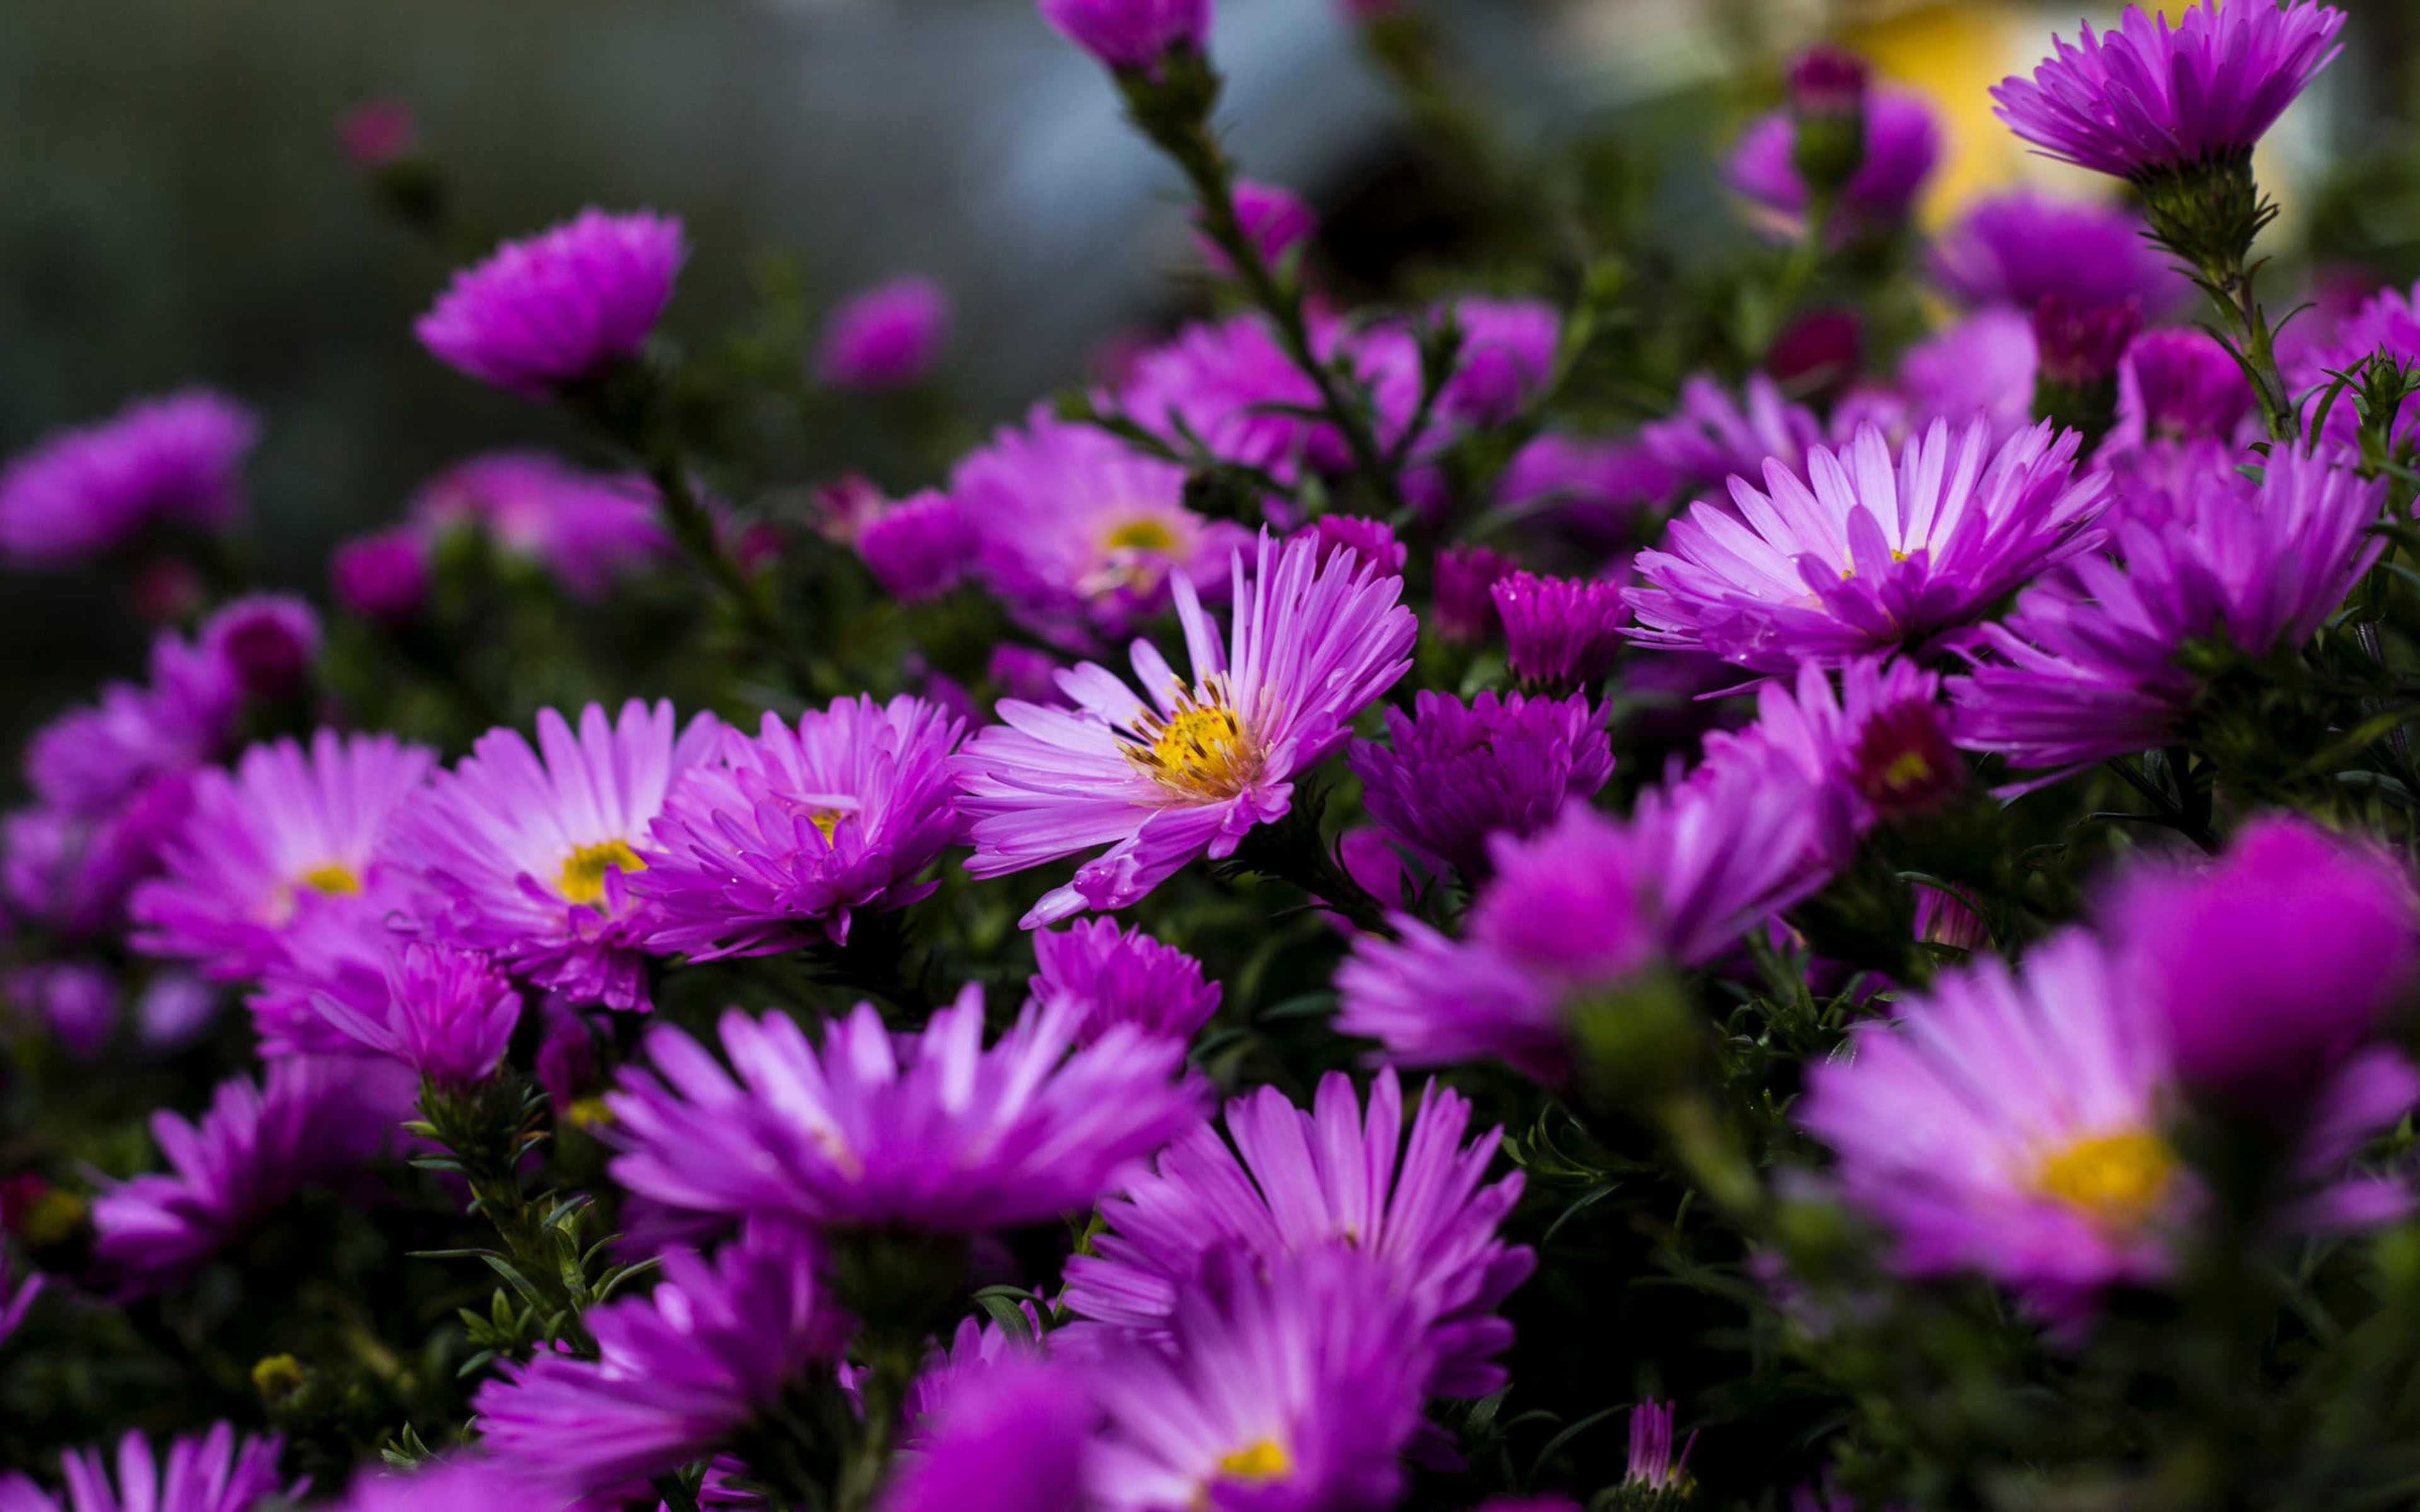 Garden Plants Blossoming On Purple Aster Flowers Summer 4k Ultra Hd  Wallpaper For Desktop Laptop Tablet Mobile Phones And Tv 3840x2400 :  